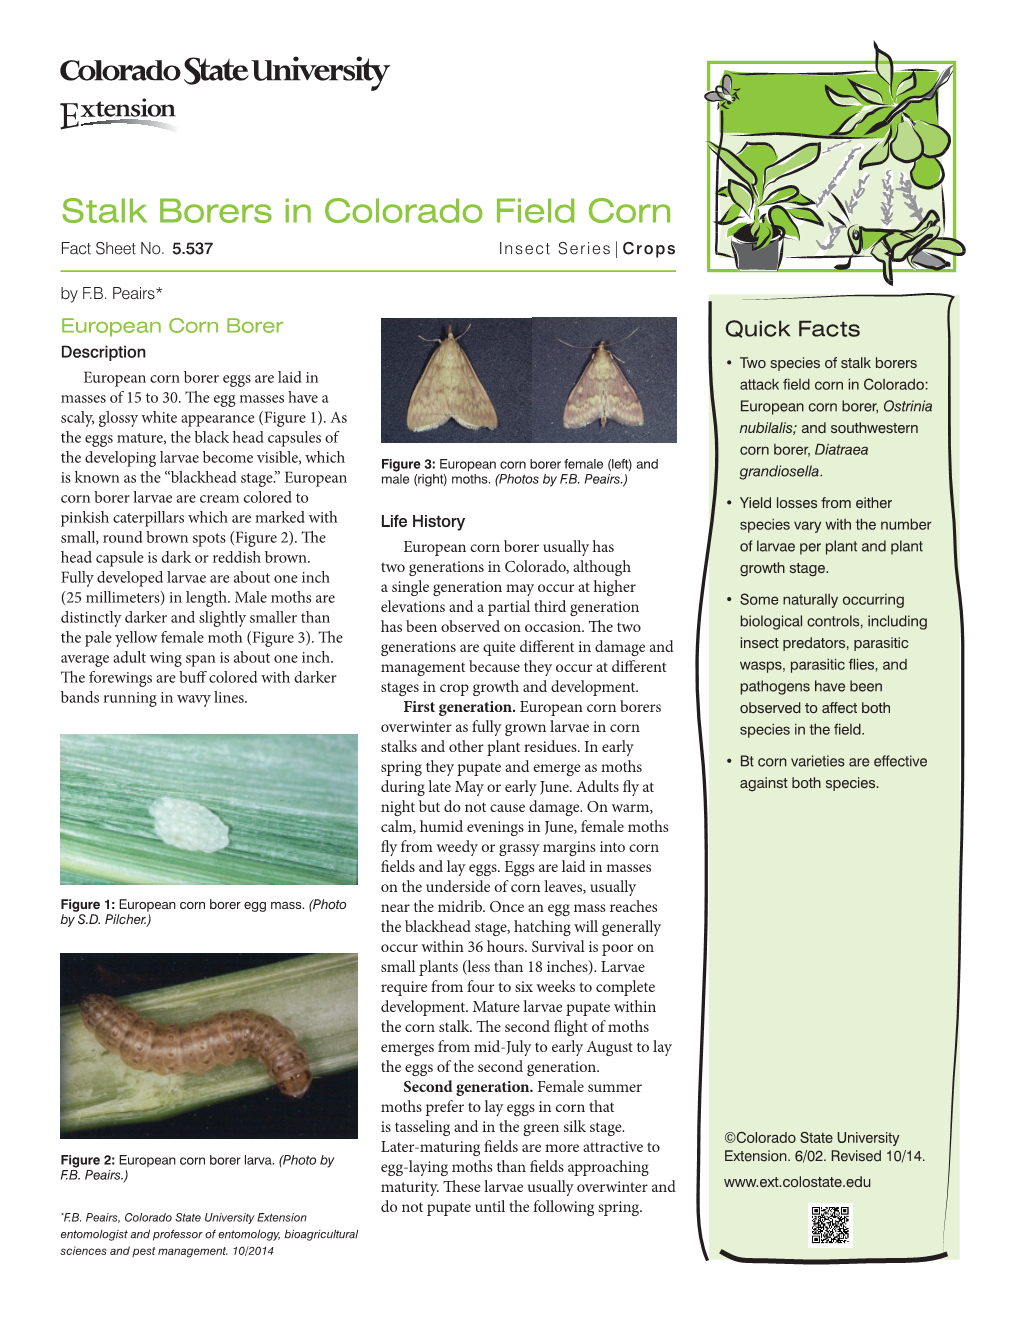 Stalk Borers in Colorado Field Corn Fact Sheet No